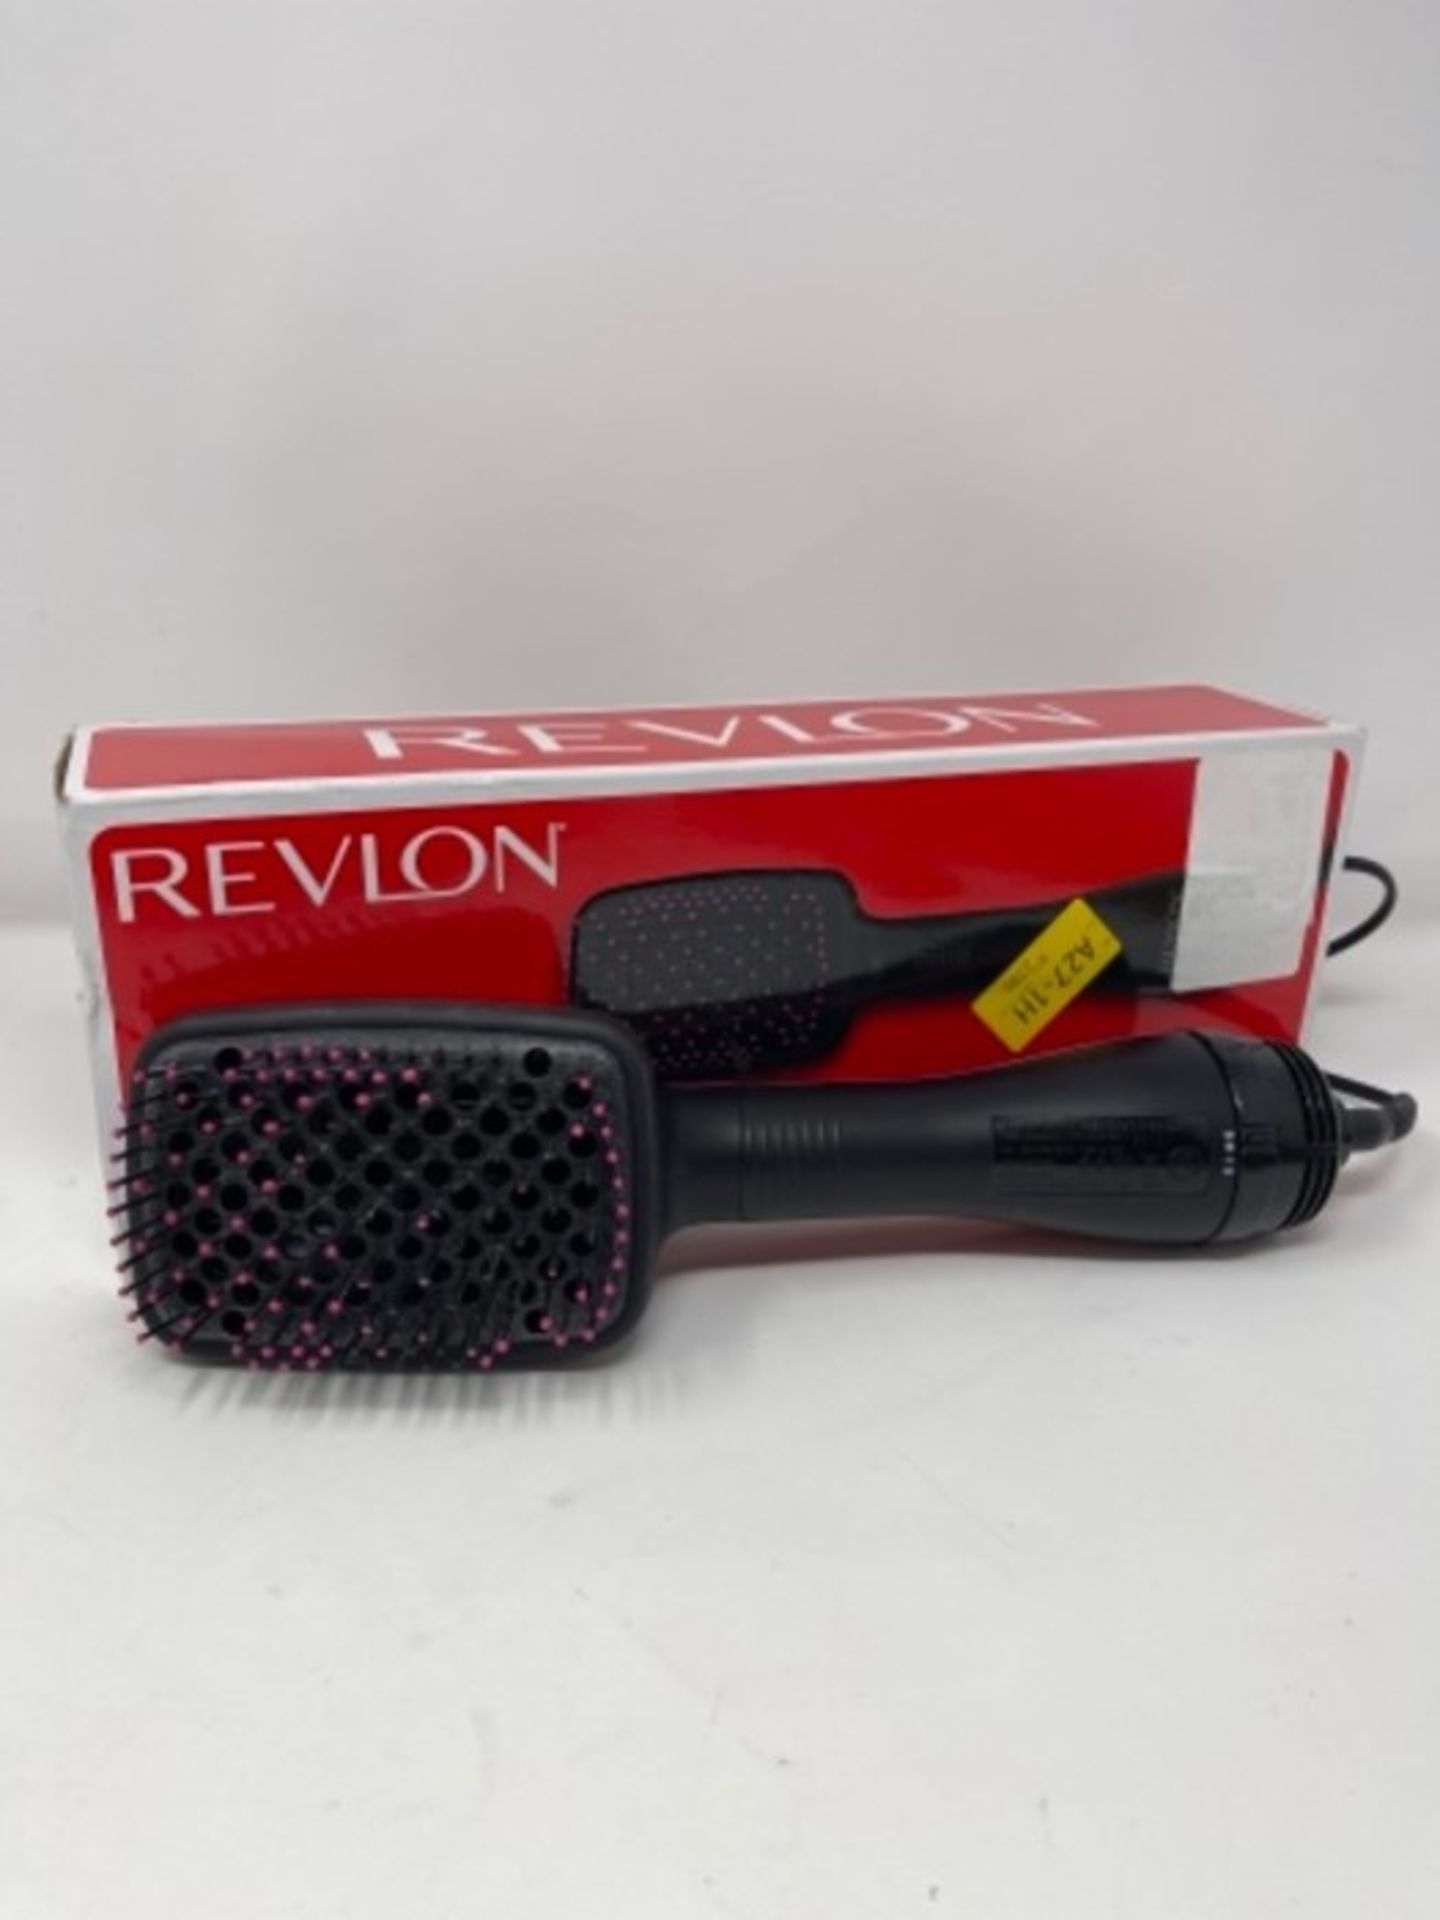 Revlon RVHA6475UK Perfectionist 2-in-1 Dryer - Image 2 of 2